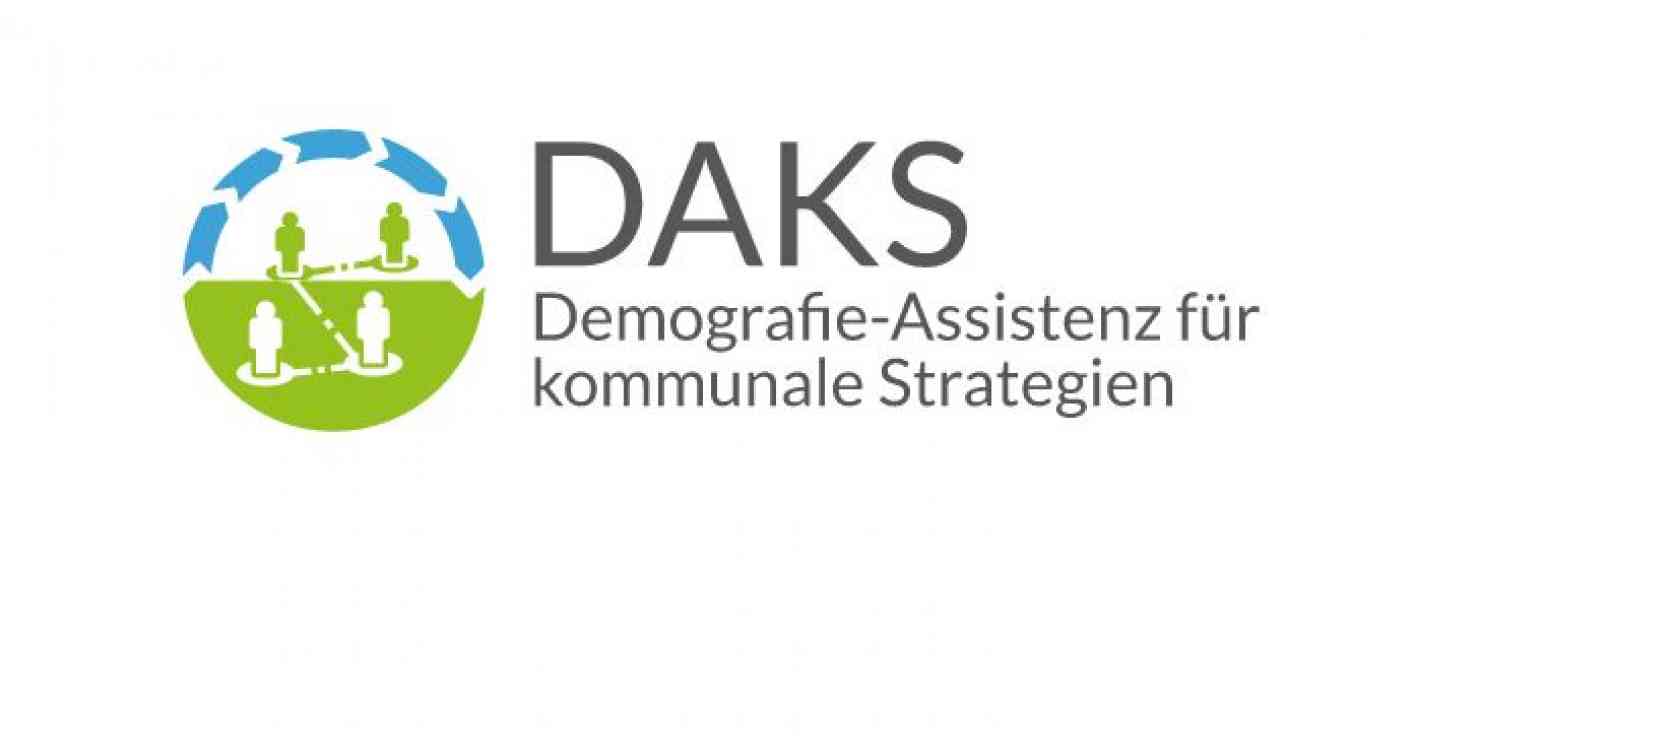 Digitales Tool für Demografiestrategien - DAKS